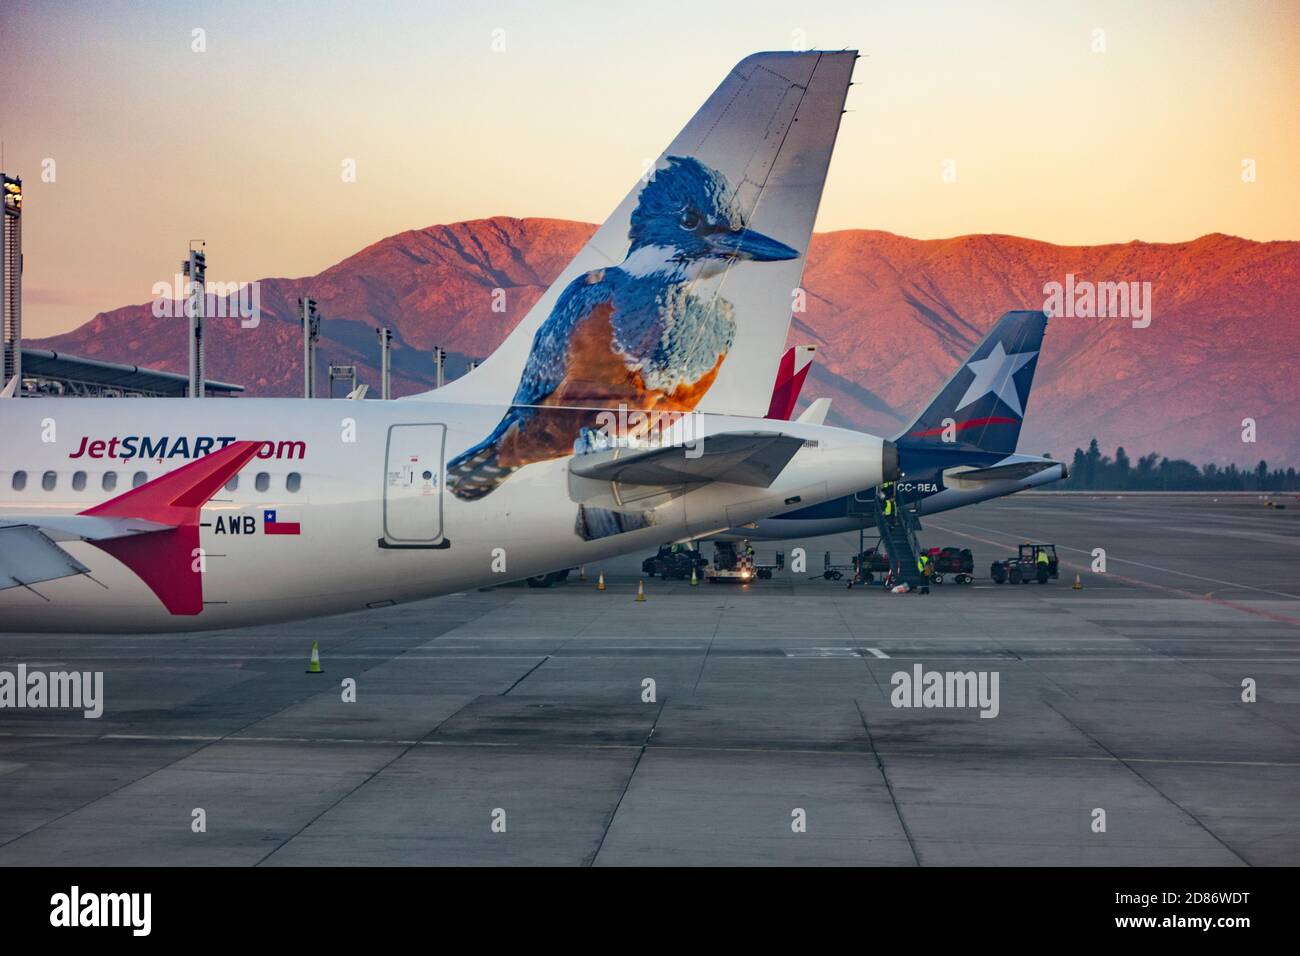 Jetsmart plane with kingfisher logo at Arturo Merino Benítez International Airport in Santiago, Chile Stock Photo